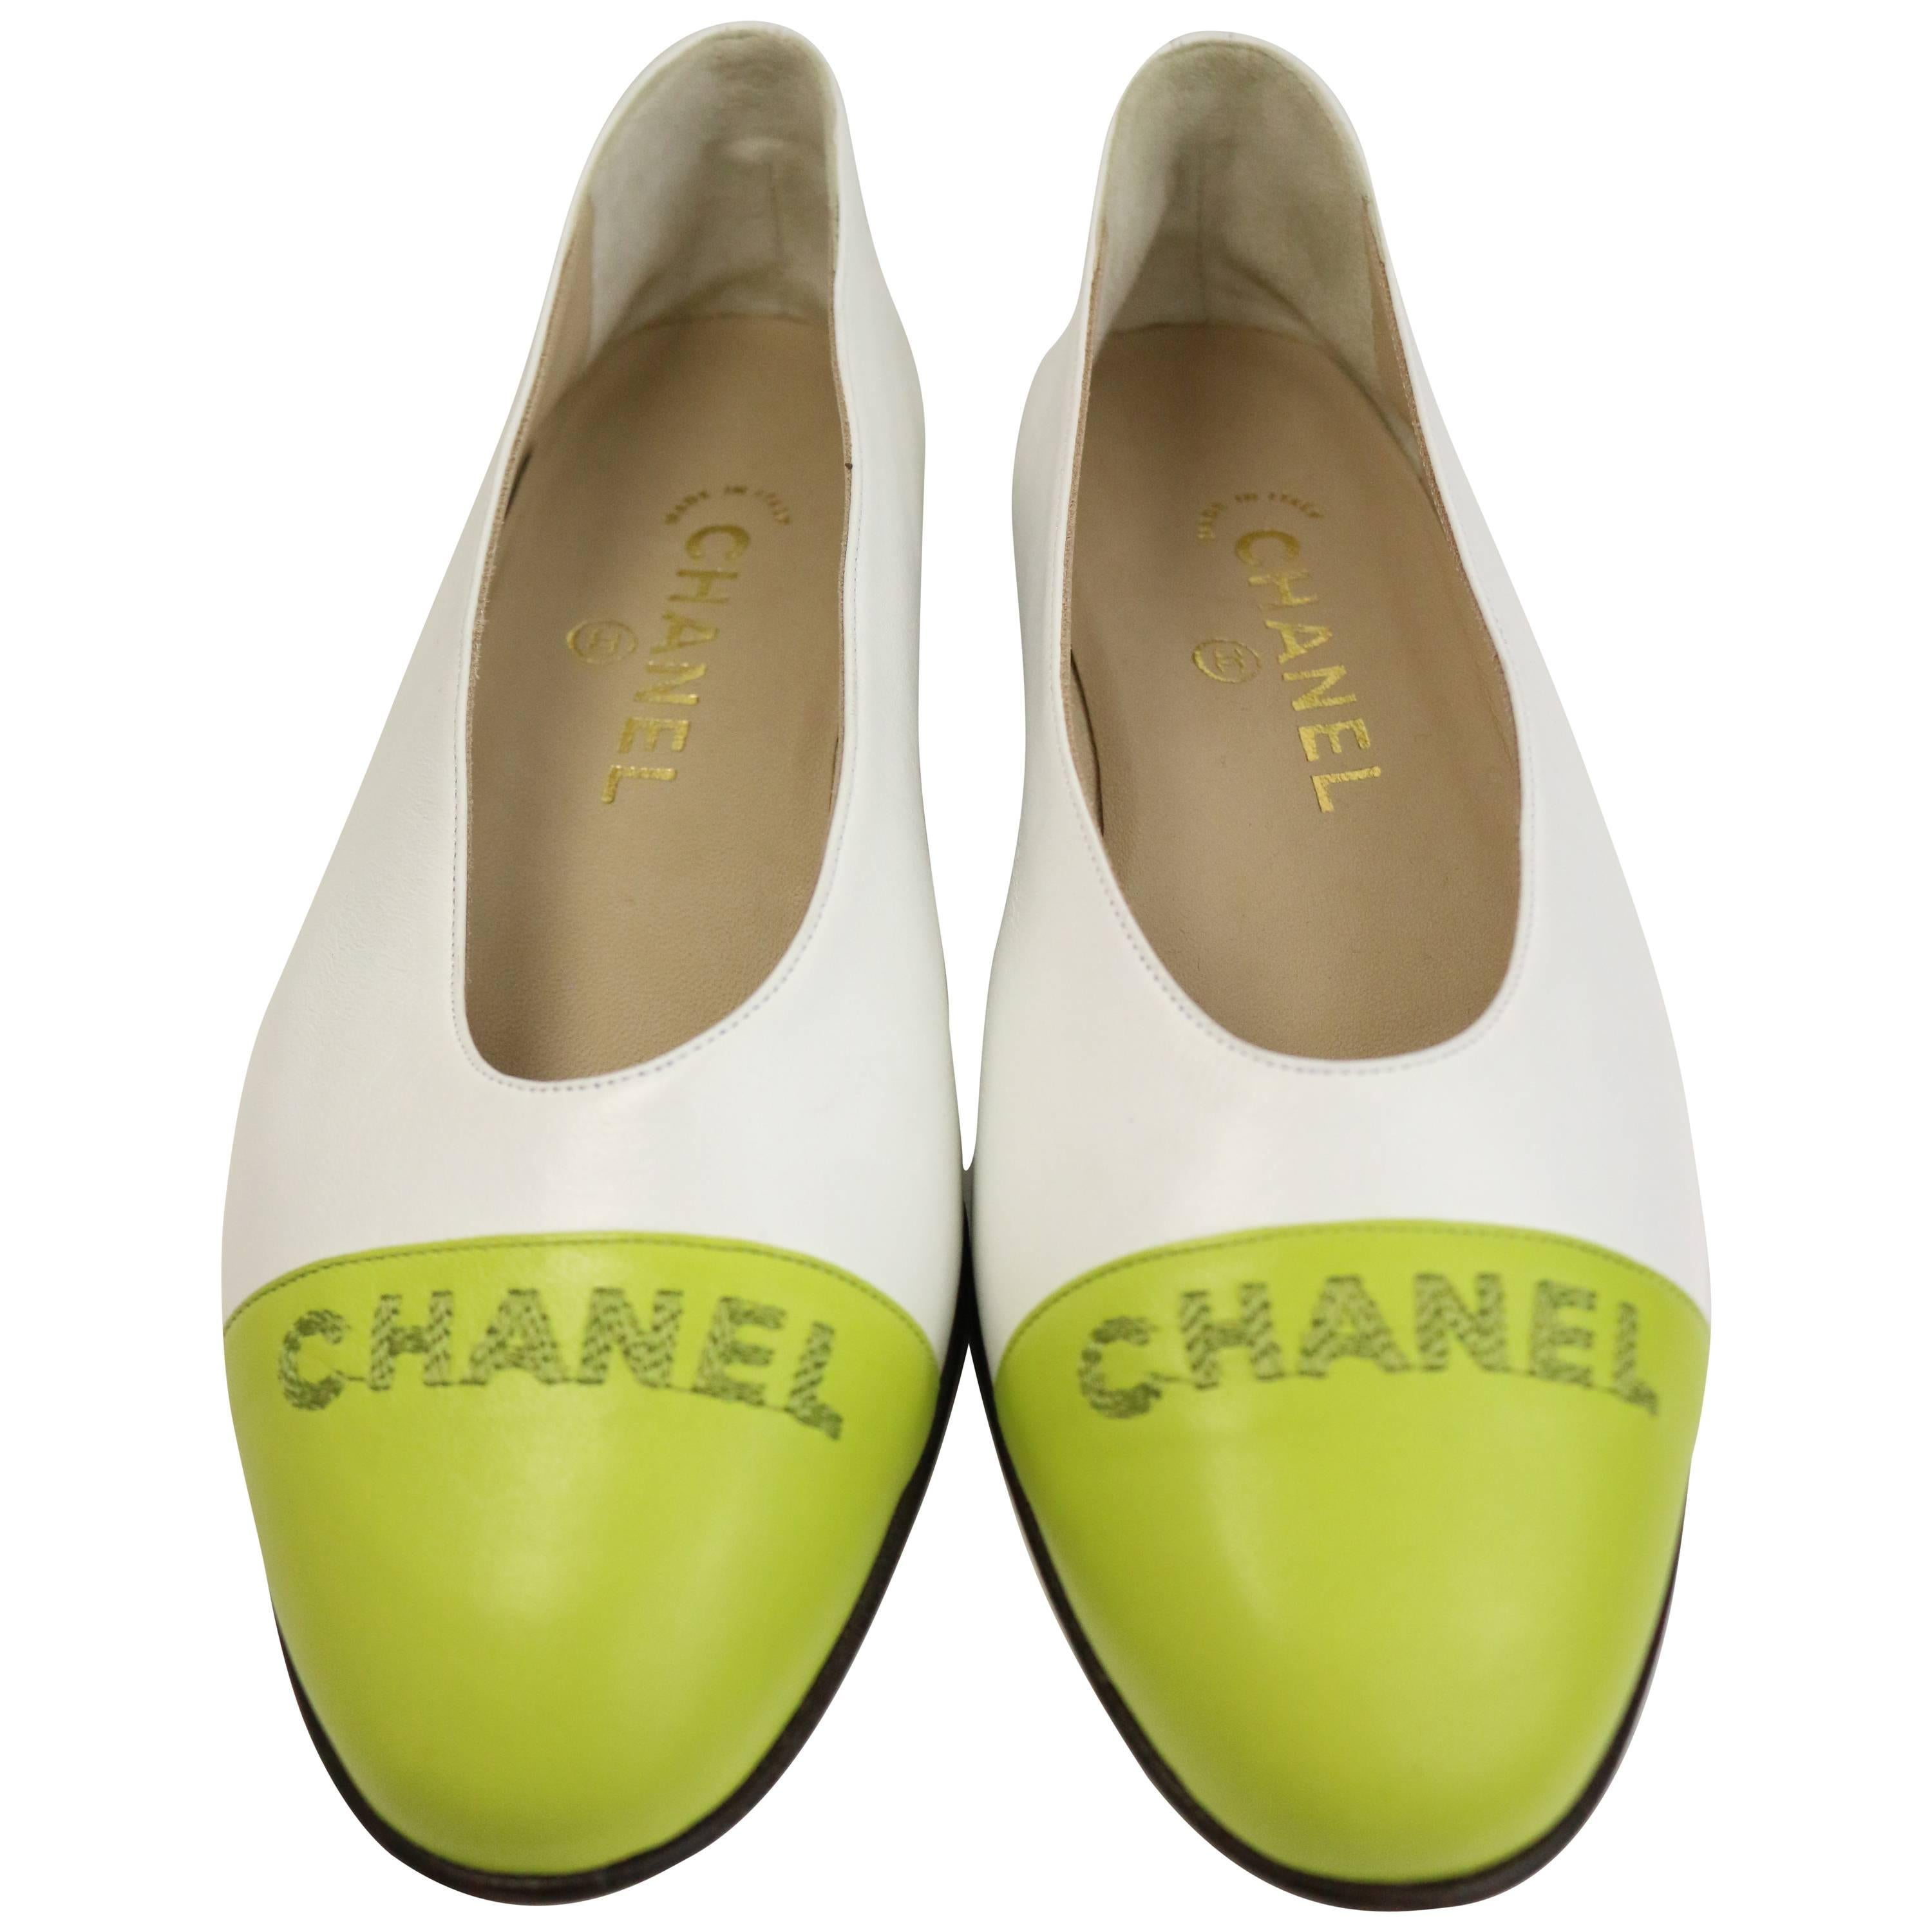 Chanel Bi Tones White/Green Leather Flats